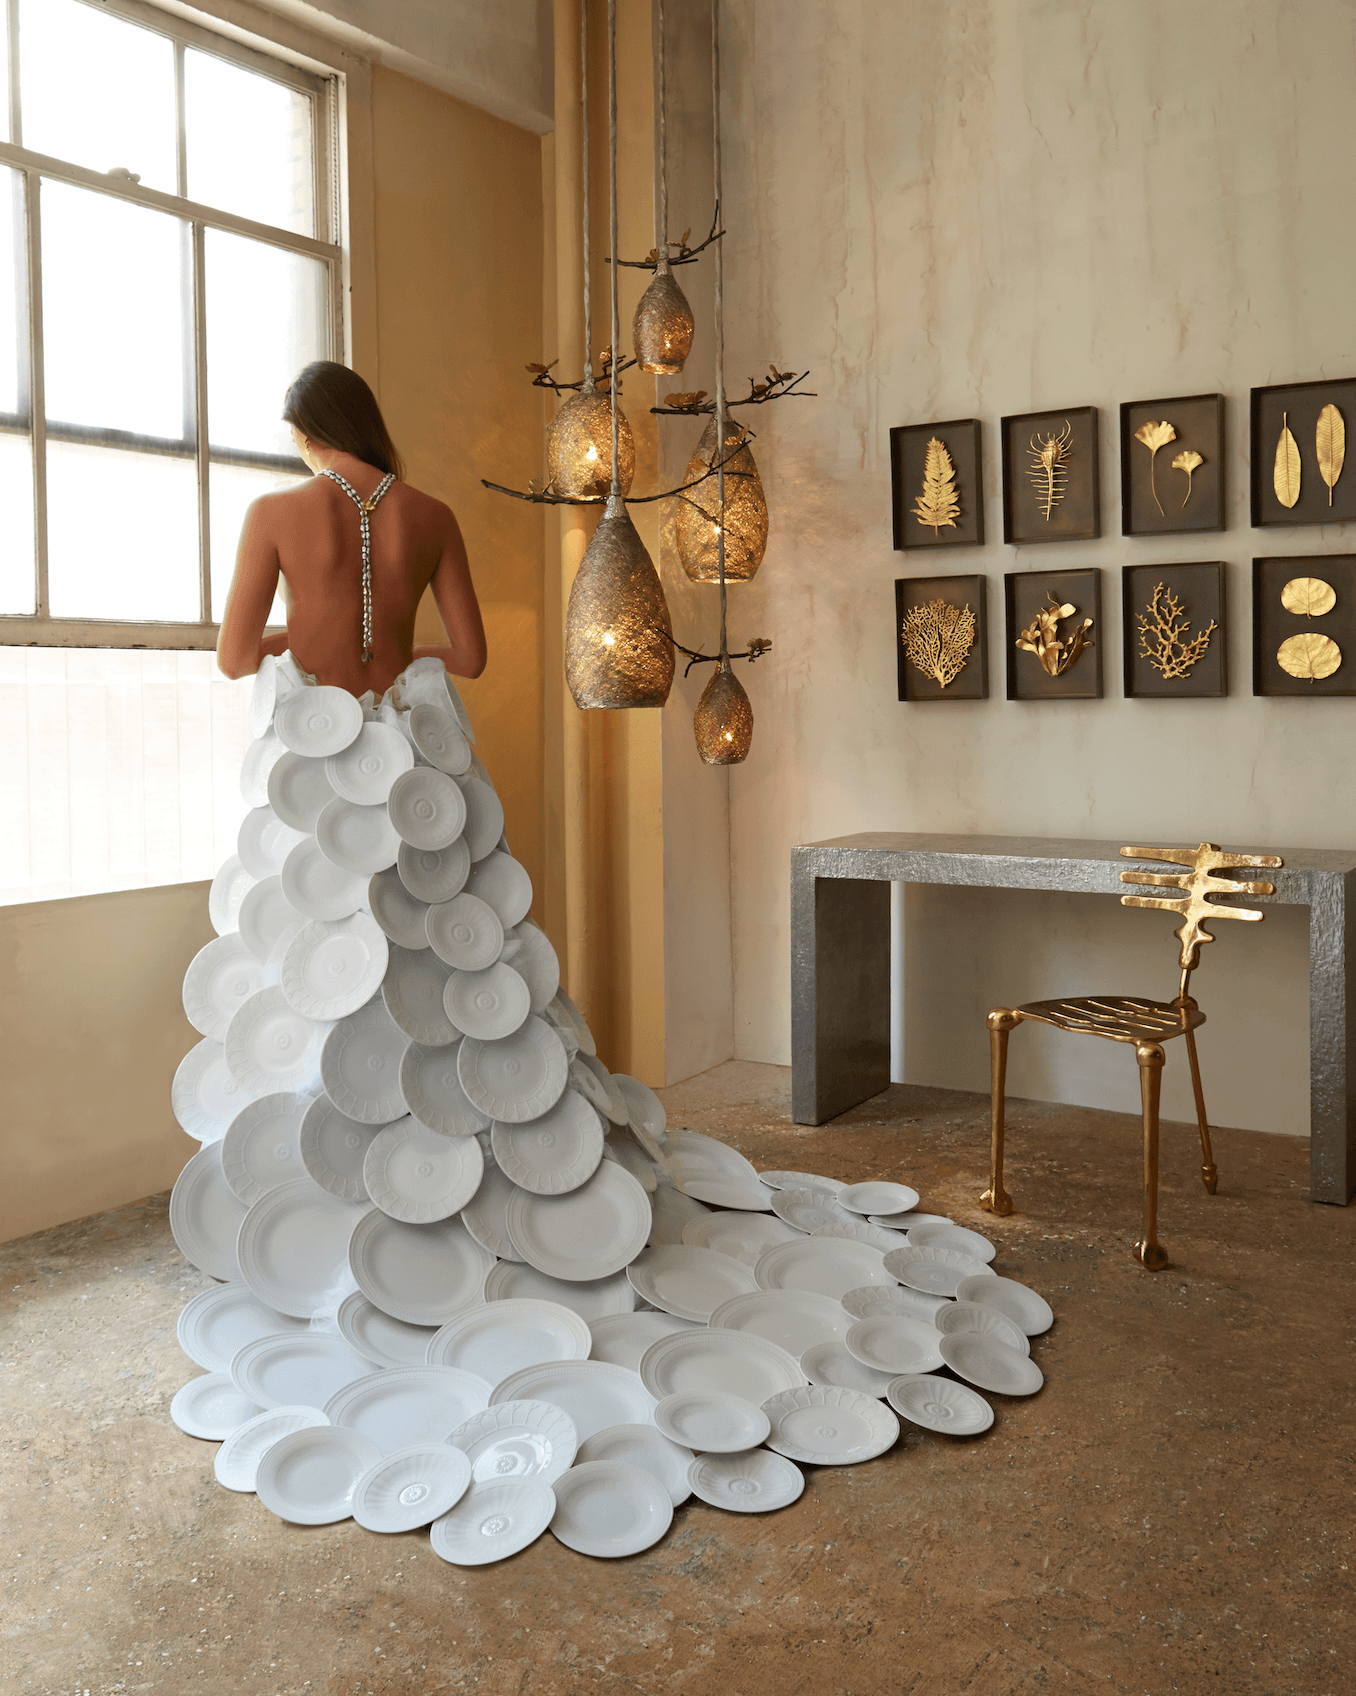 Winter Wedding Ideas for a Cozy, Festive Fête - Michael Aram